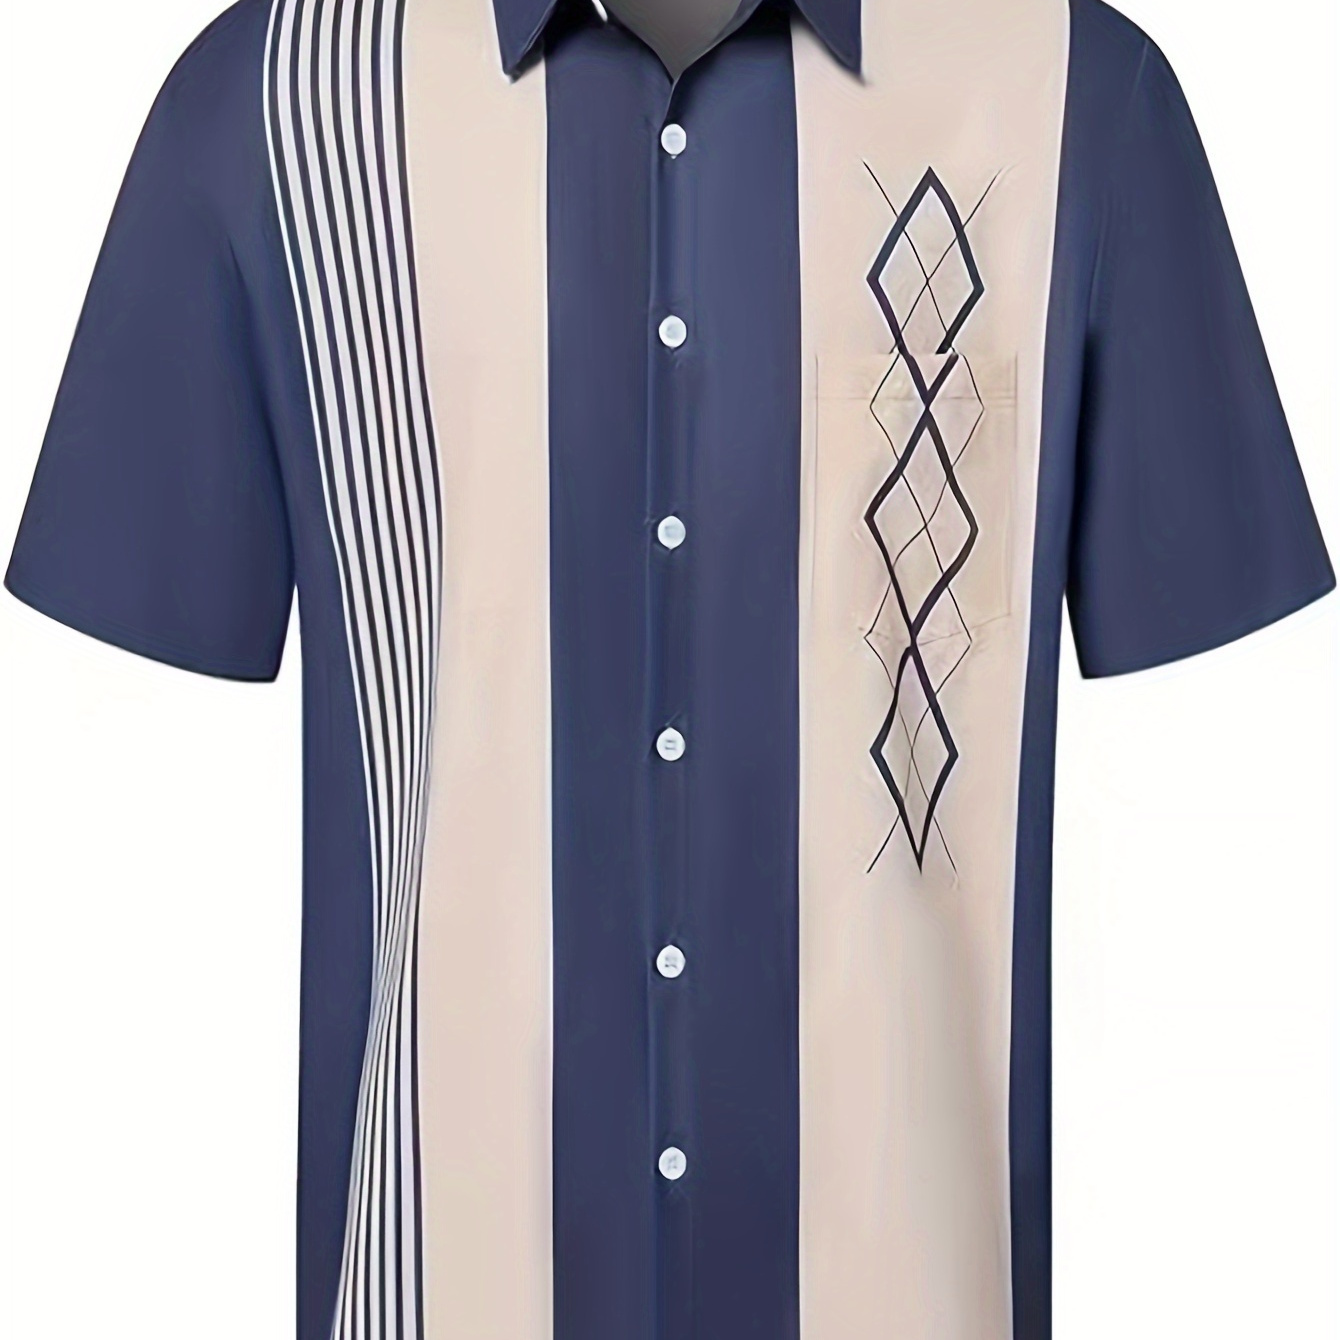 

Men's Casual Vintage Style Geometric Print Button Up Short Sleeve Shirt For Summer Beach Resort Golf Bowling